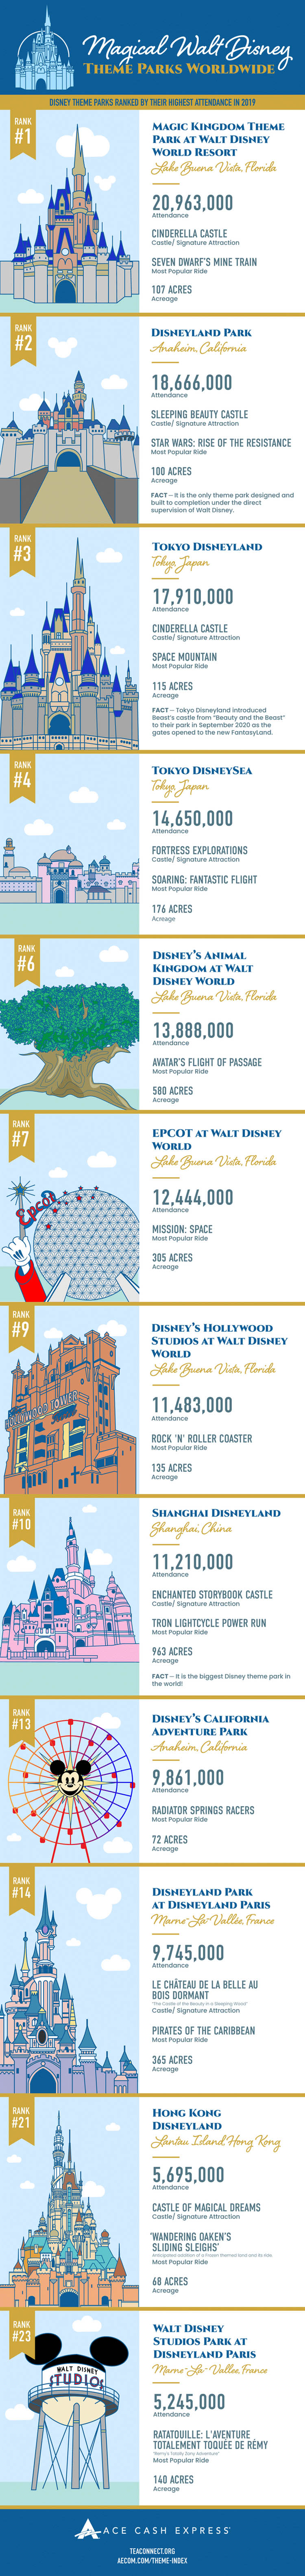 Attendance Rates of the World's Walt Disney Theme Parks